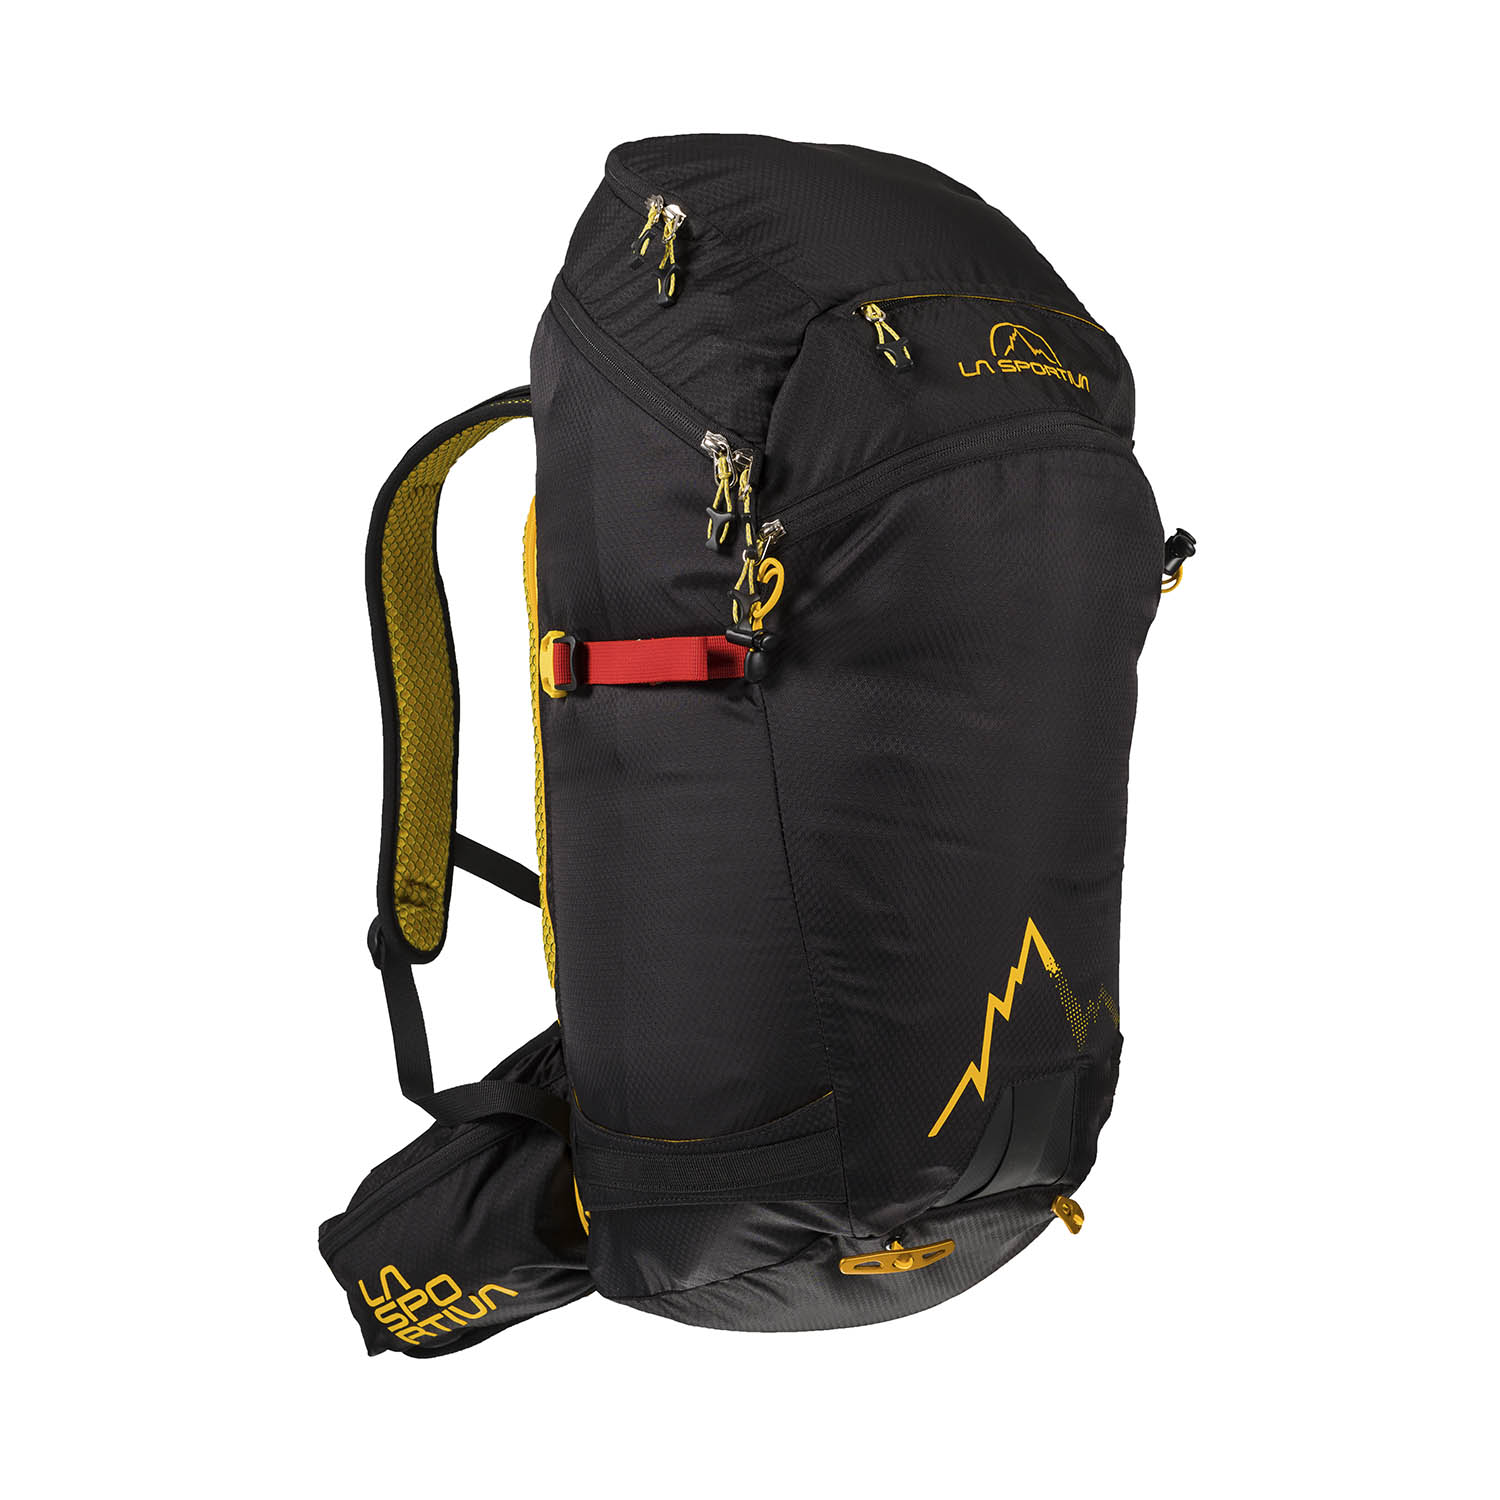 La Sportiva Sunlite Backpack - Black/Yellow